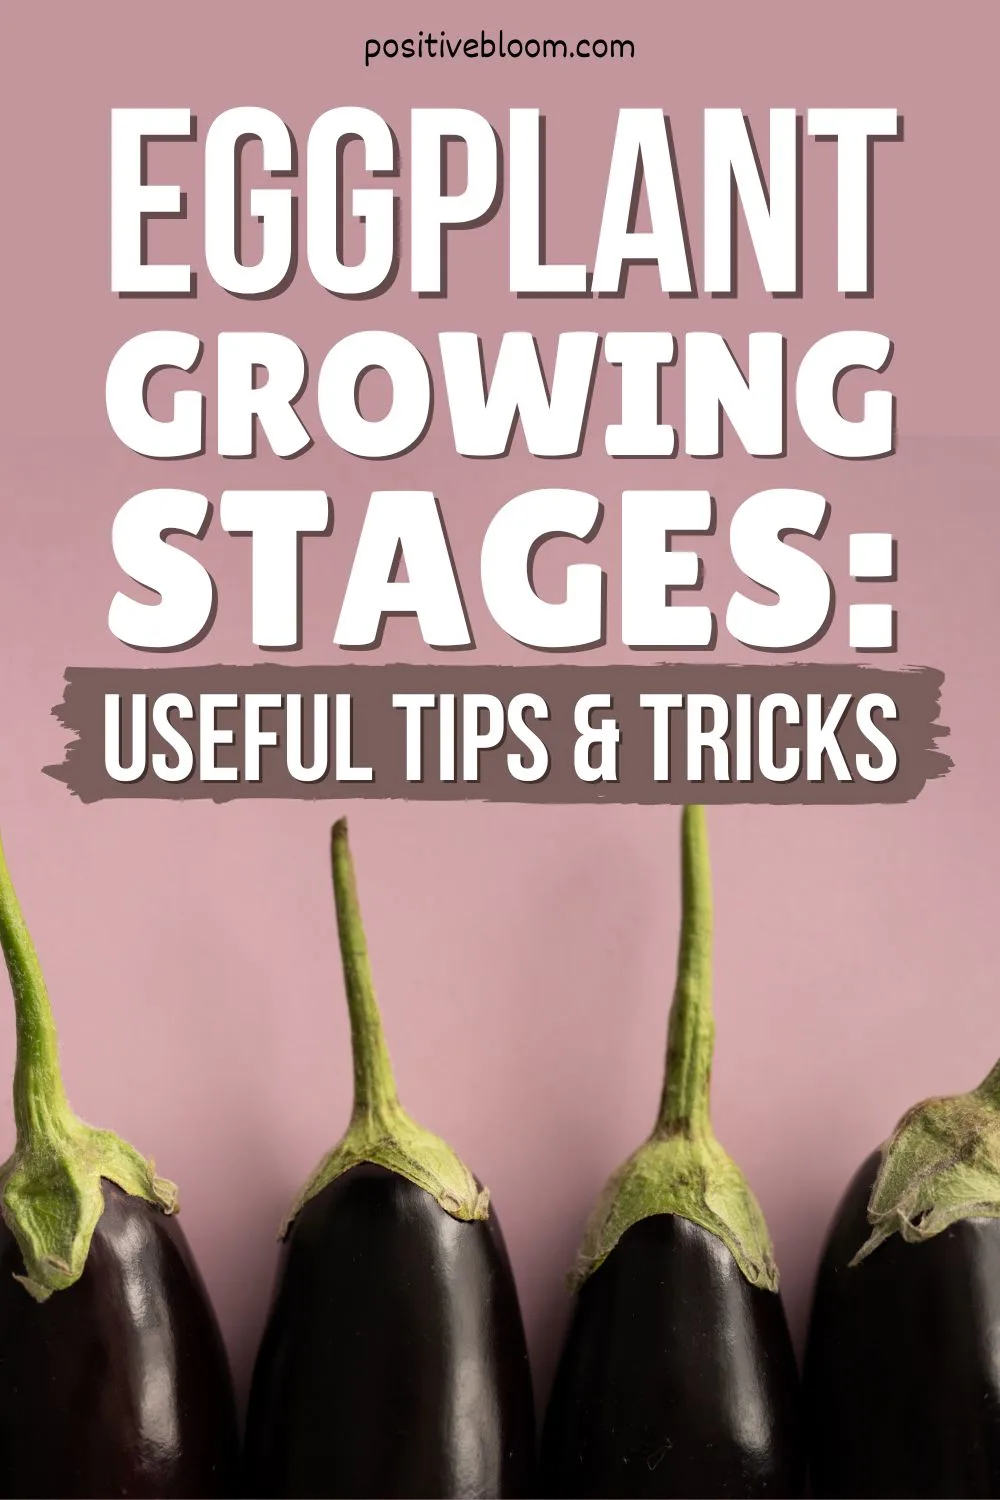 Eggplant Growing Stages Useful Tips For Growing Eggplants Pinterest